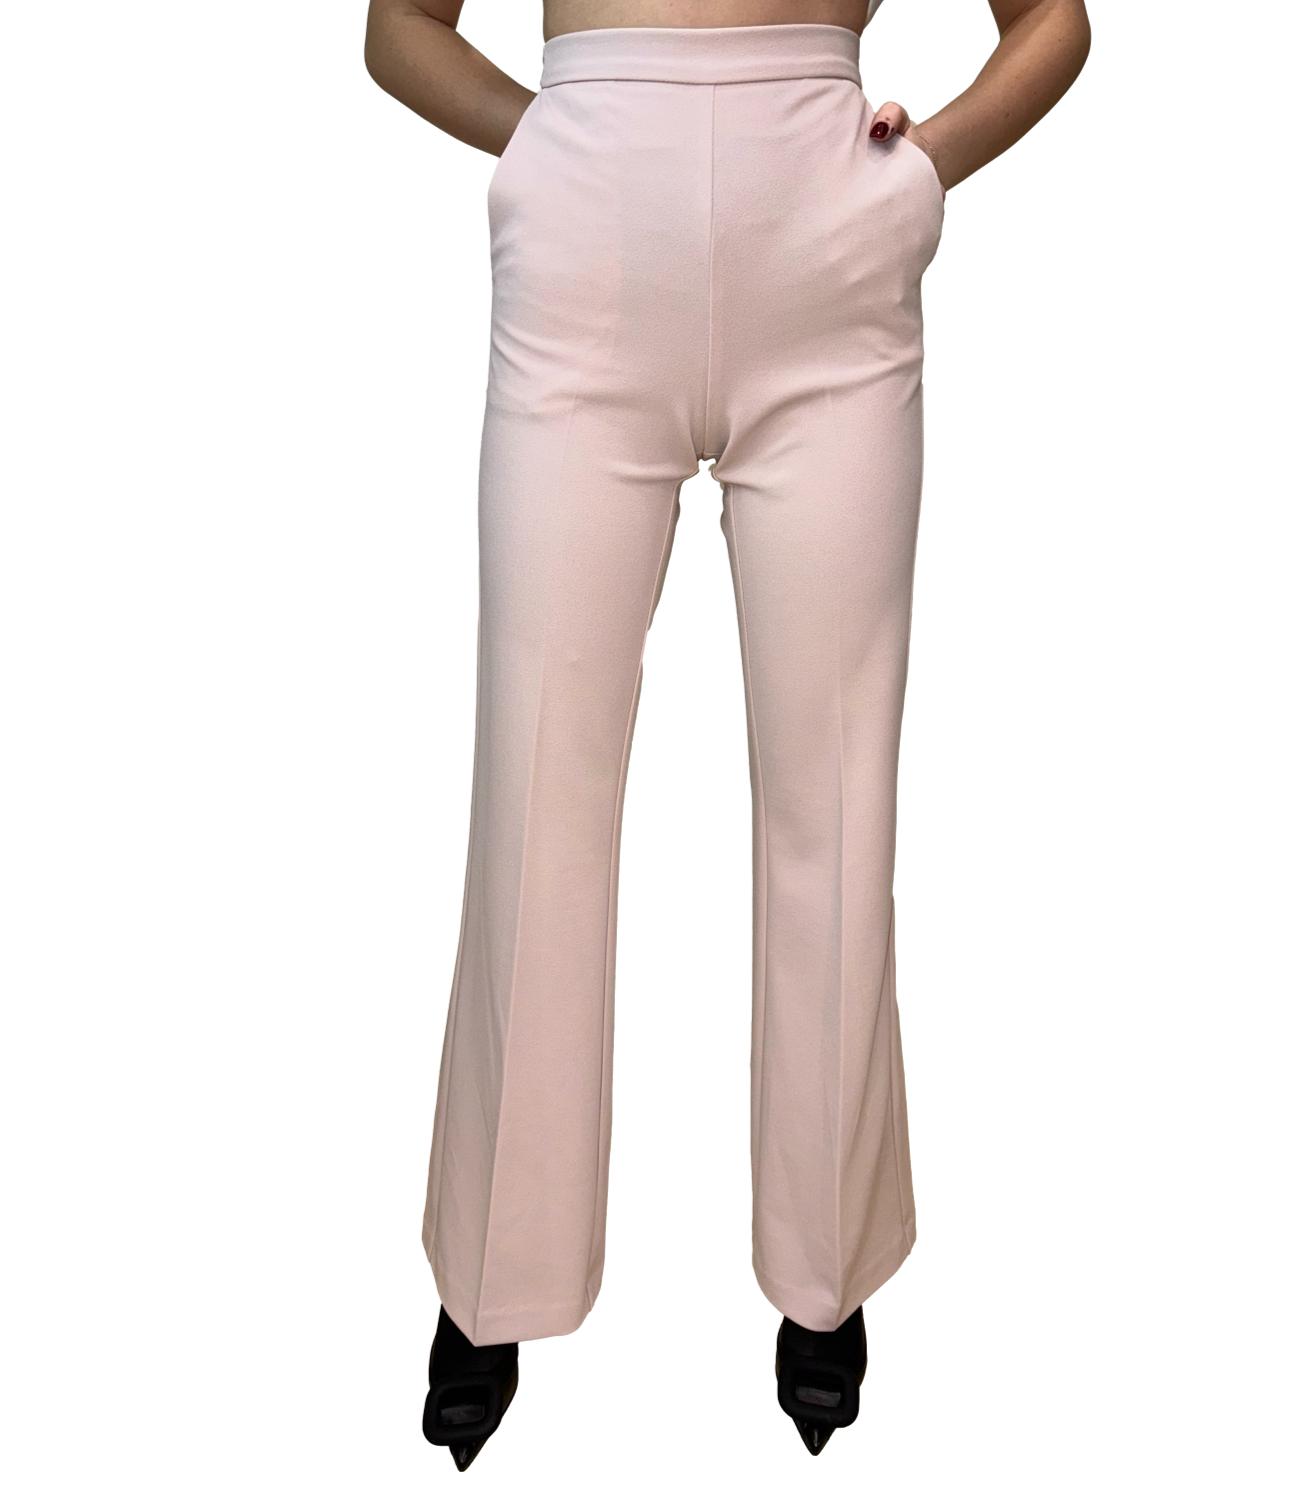 Pantalone rosa candy donna